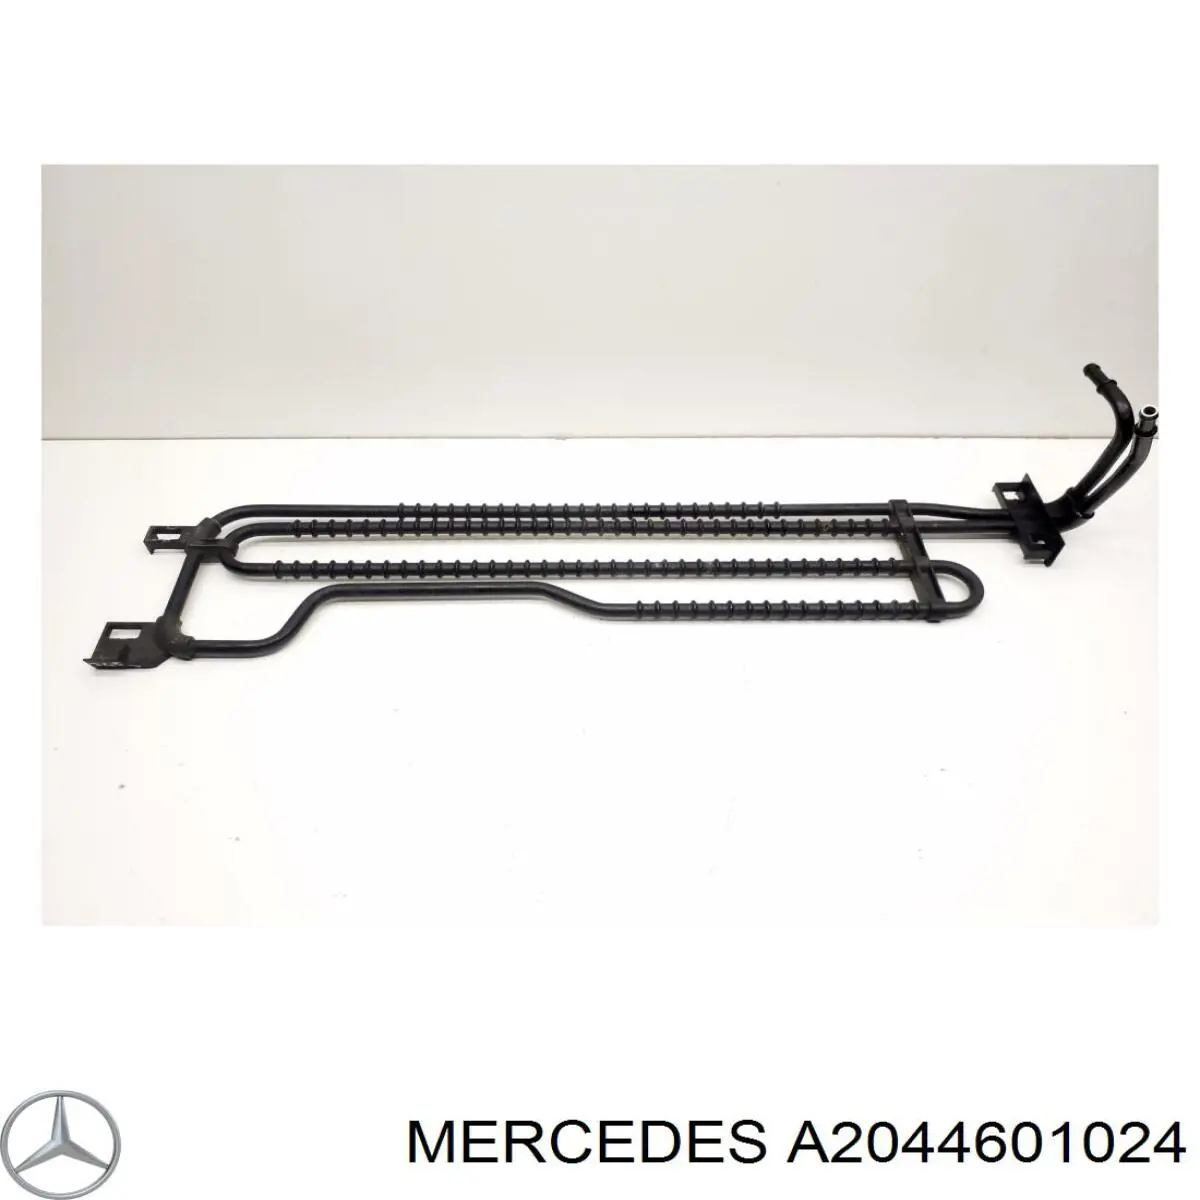 A2044601024 Mercedes radiador de direccion asistida